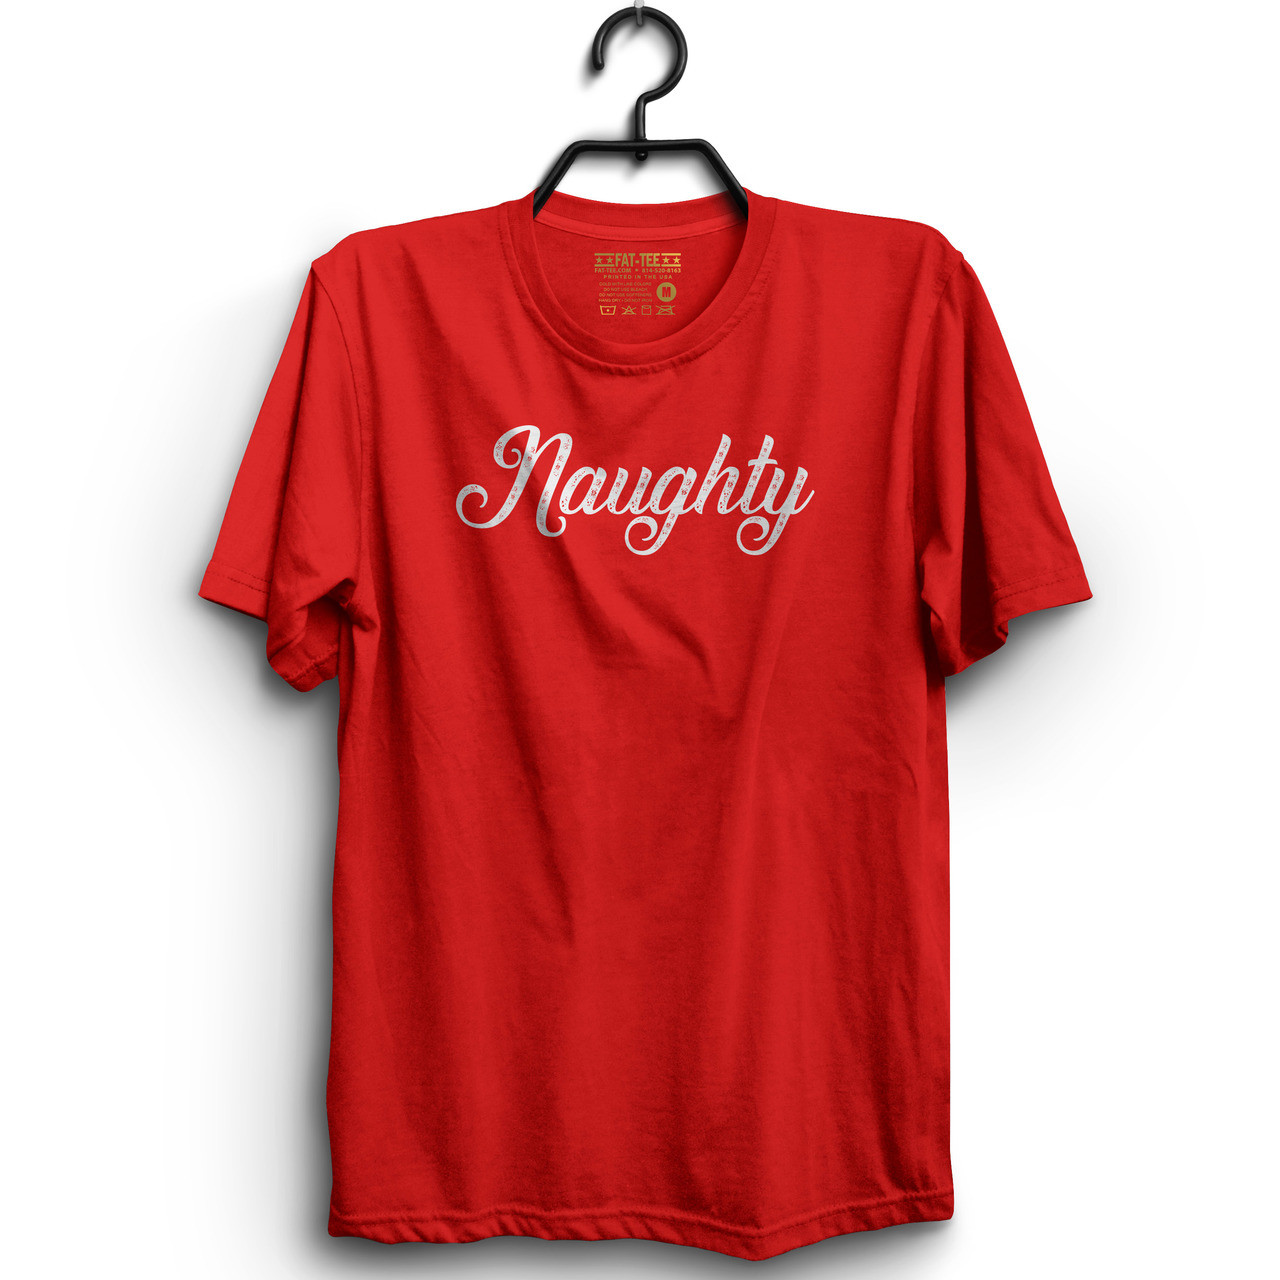 Naughty T Shirt First Amendment Tees Co Inc